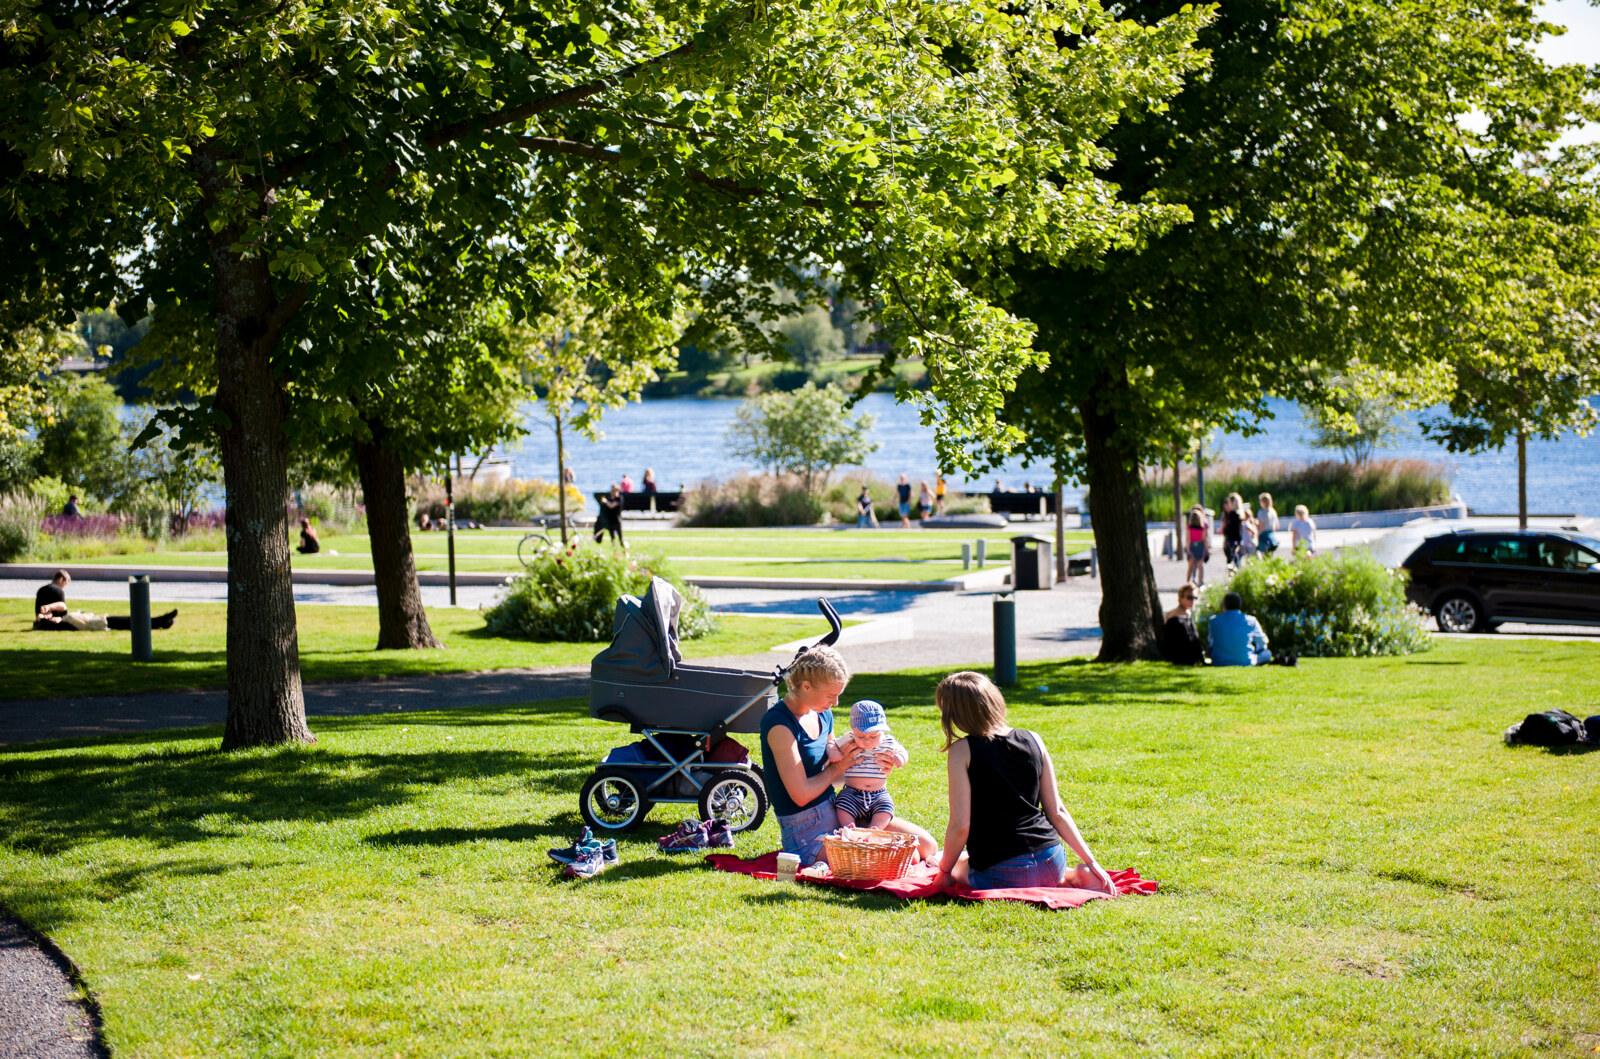 Umeå city park